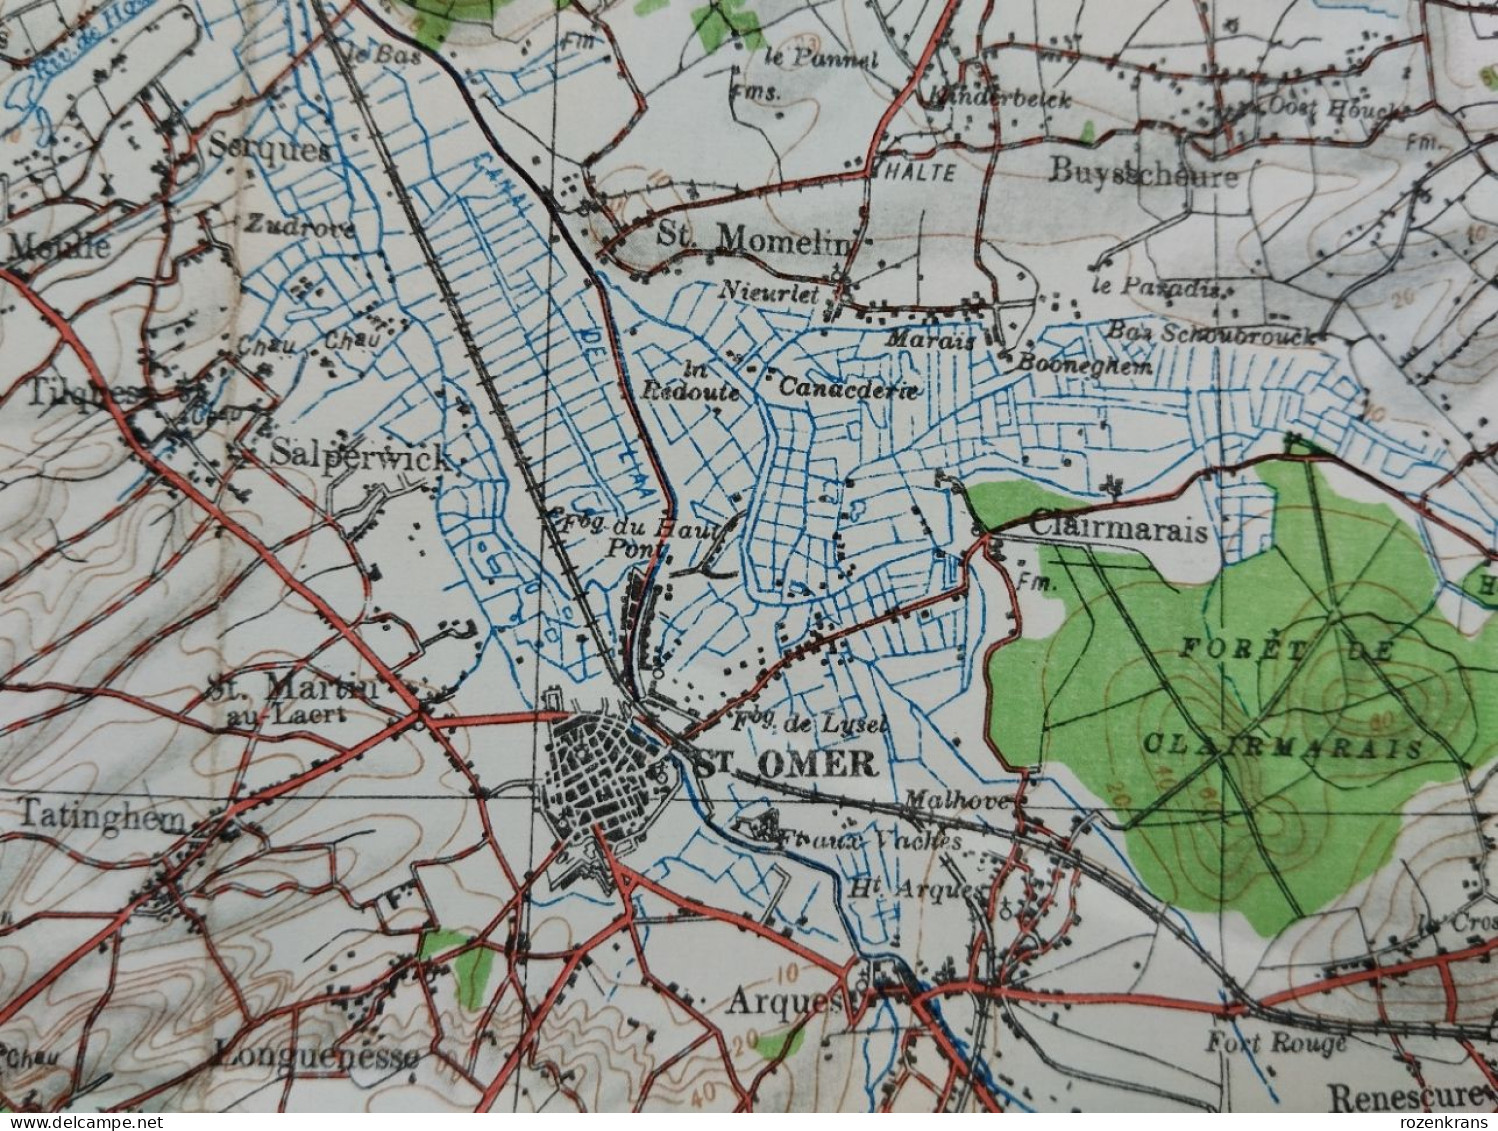 Carte Topographique Militaire UK War Office 1917 World War 1 WW1 Hazebrouck Ieper Poperinge Armentieres Cassel Kemmel